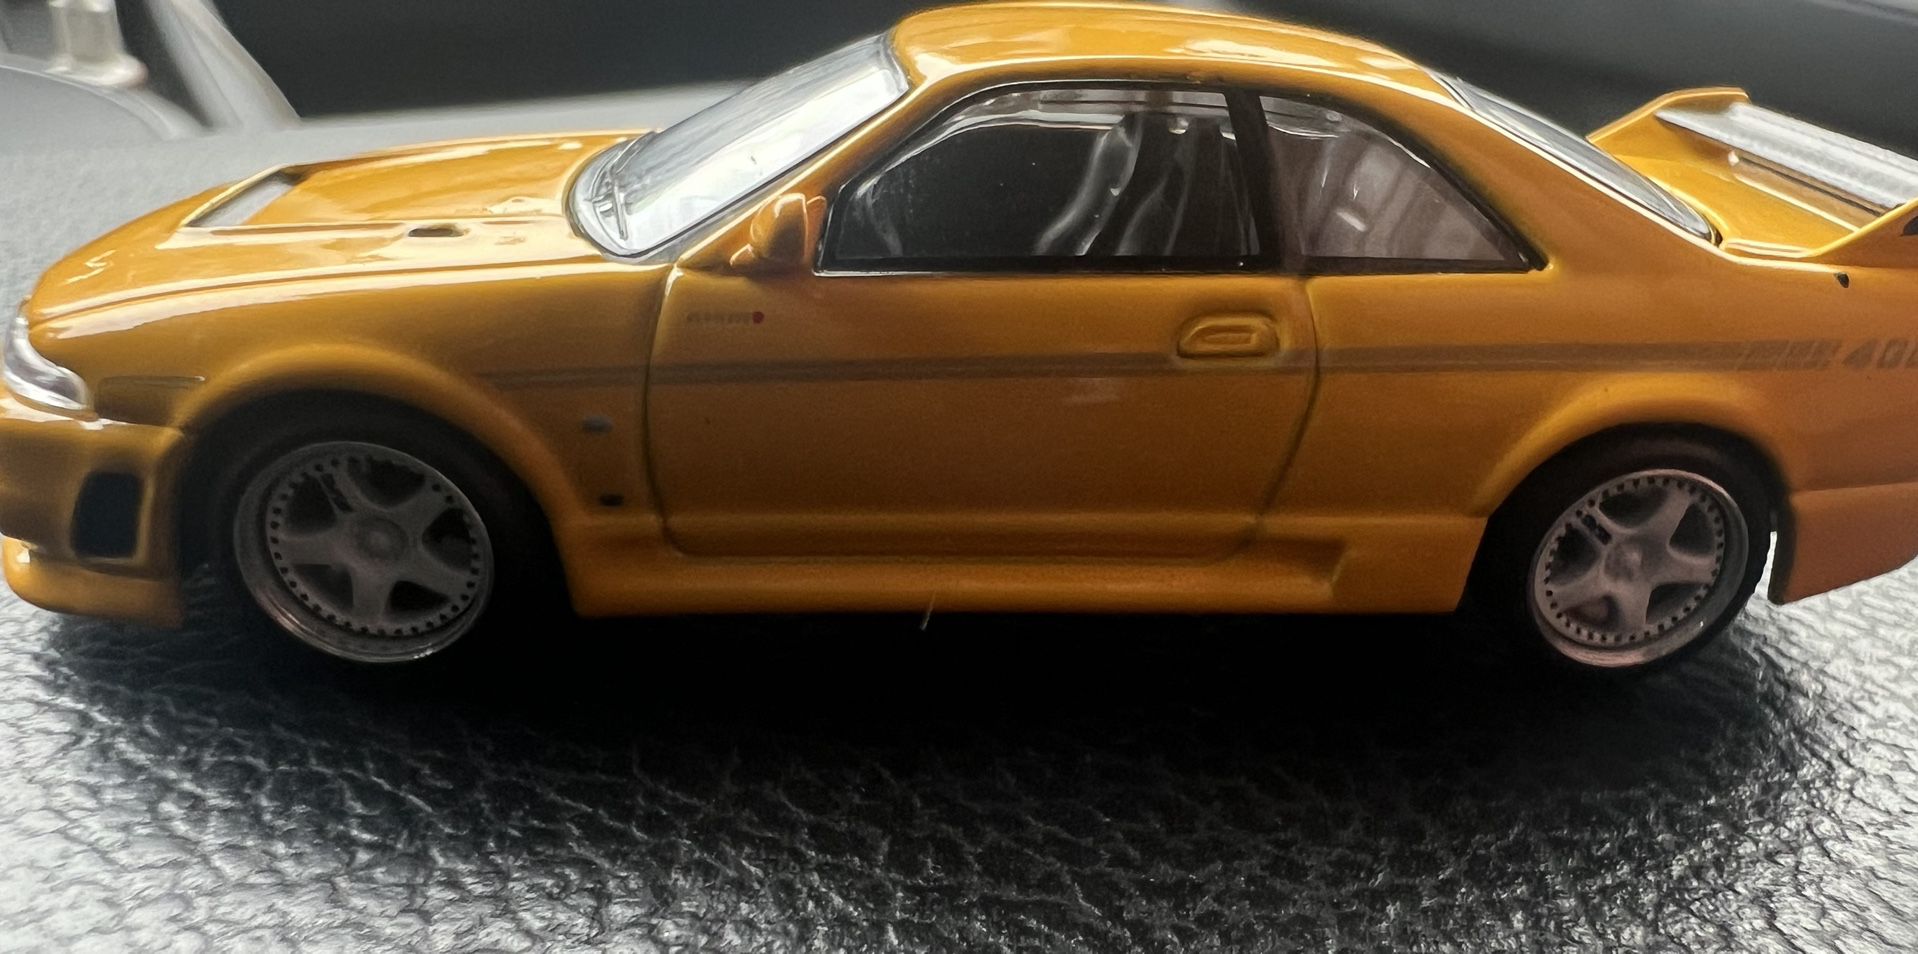 POPRACE 1/64 Nissan GT-R Nismo 400R Prototype Yellow 